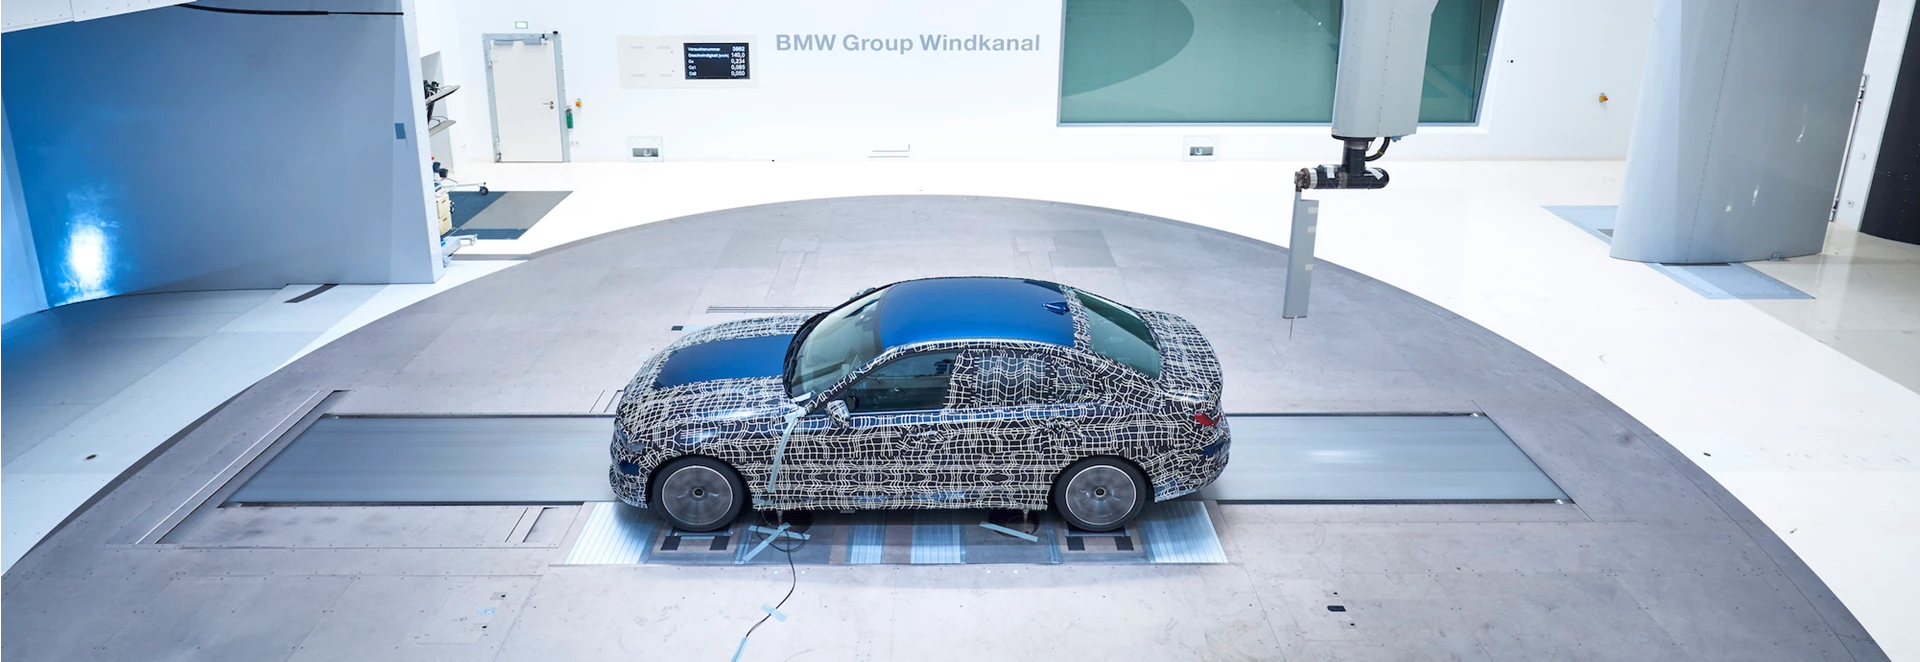 2019 BMW 3 Series enters final testing